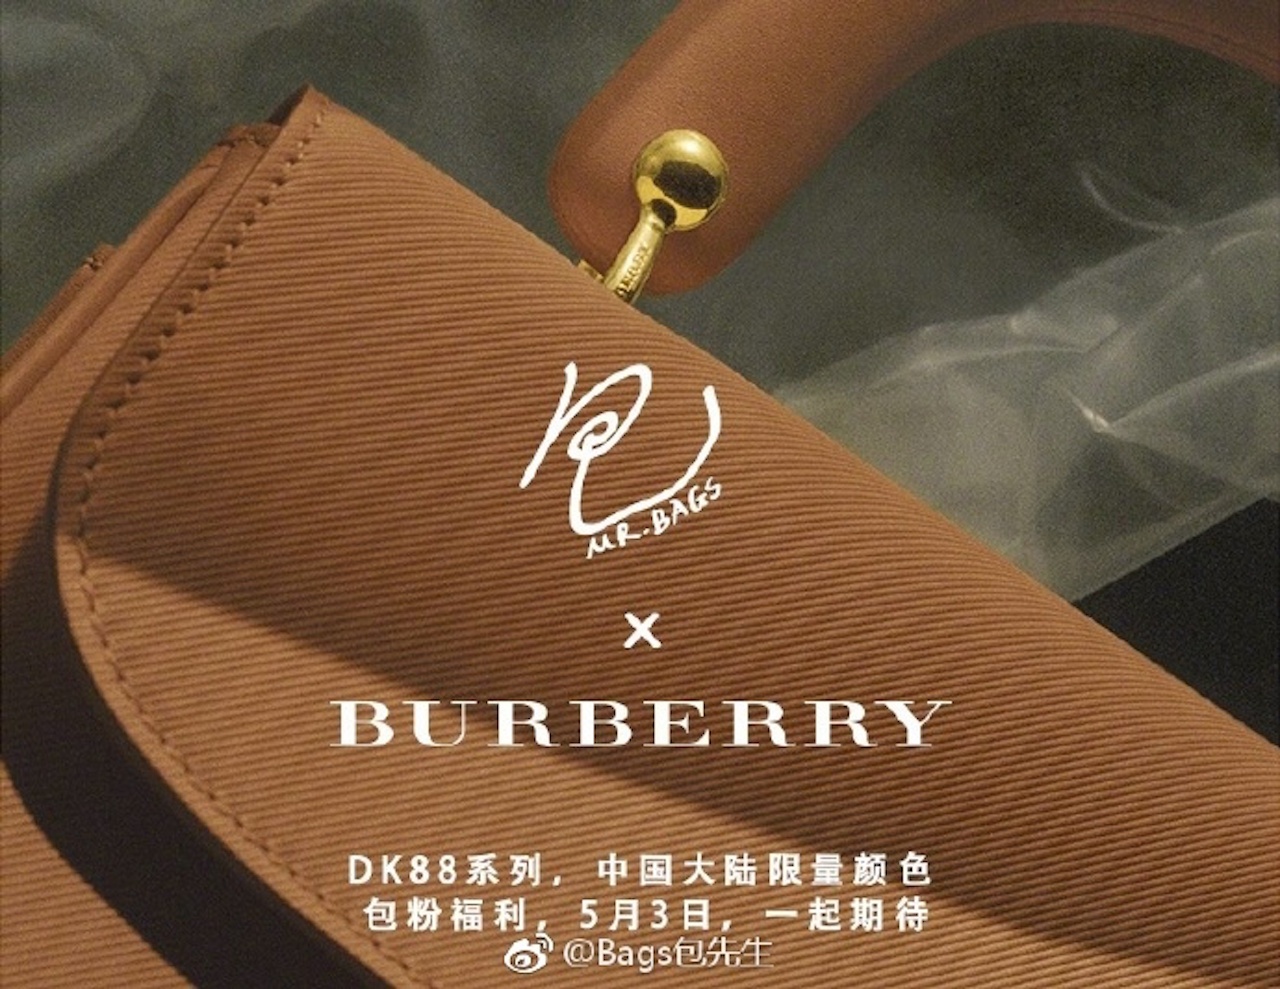 Mr. Bag x Burberry campaign. Photo: Mr.Bag/Weibo